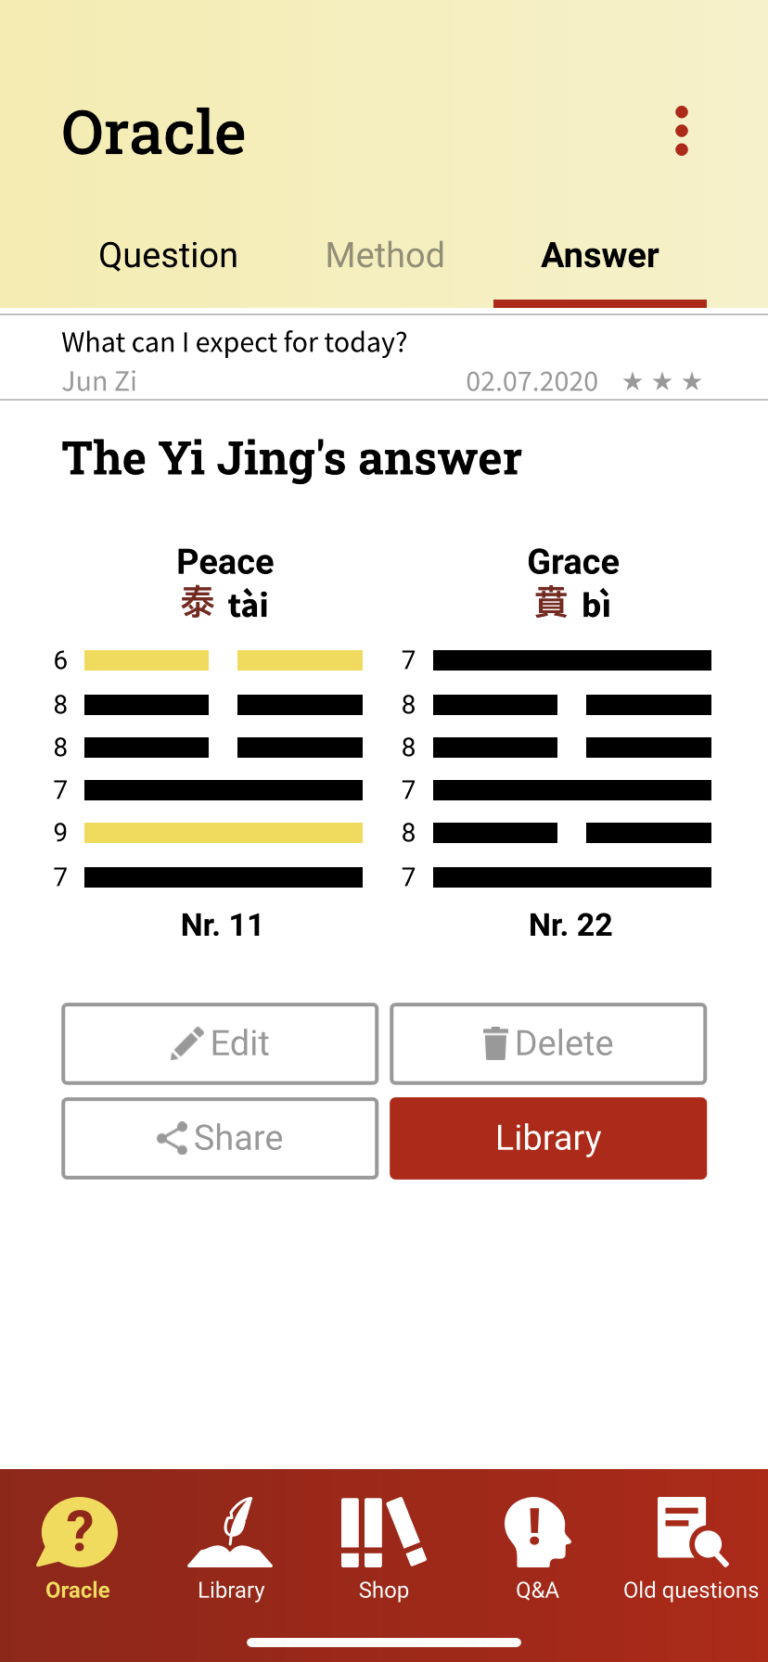 The Yi Jing's answer